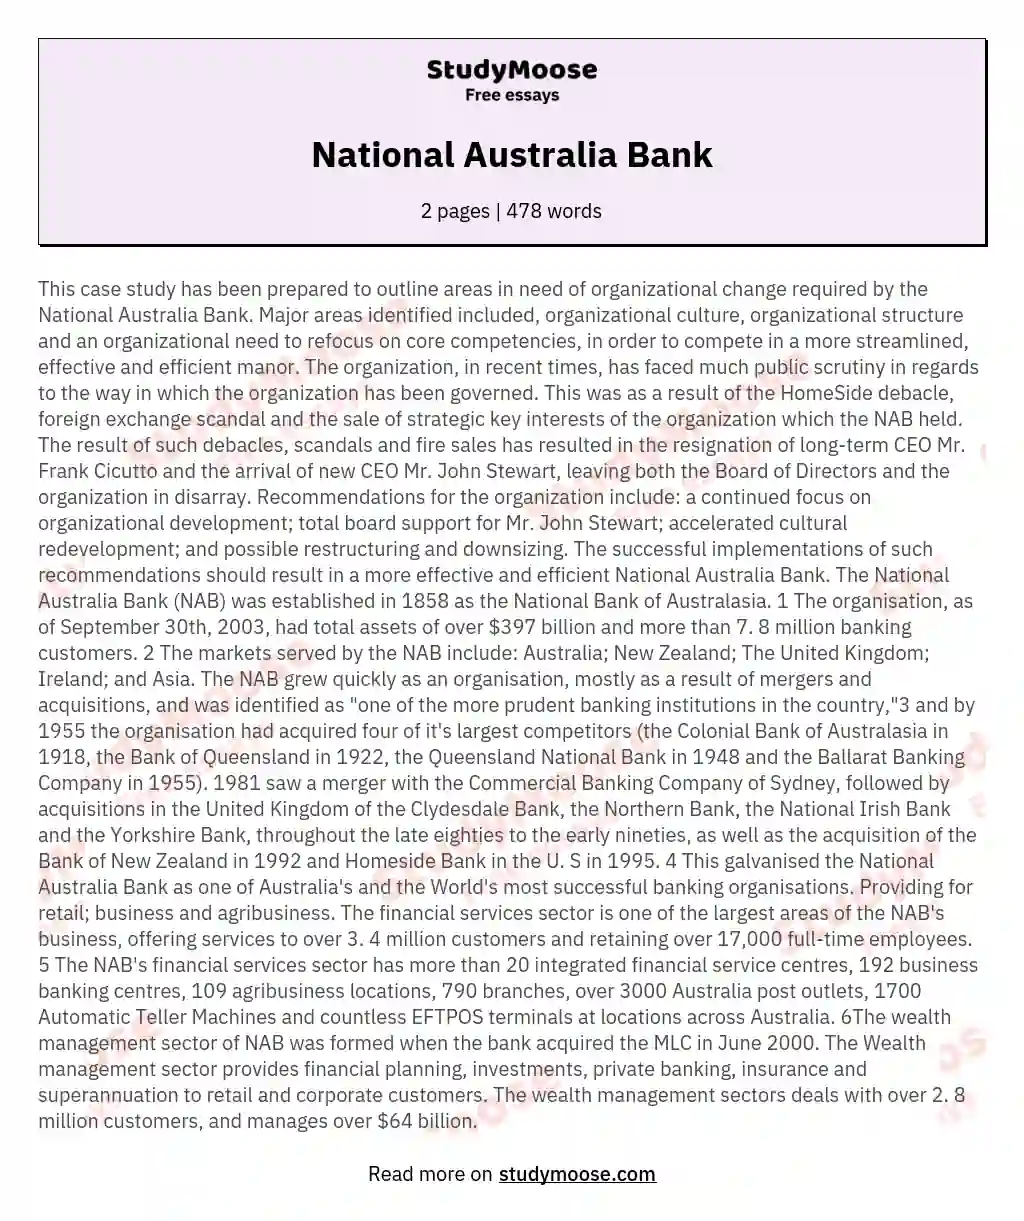 National Australia Bank essay